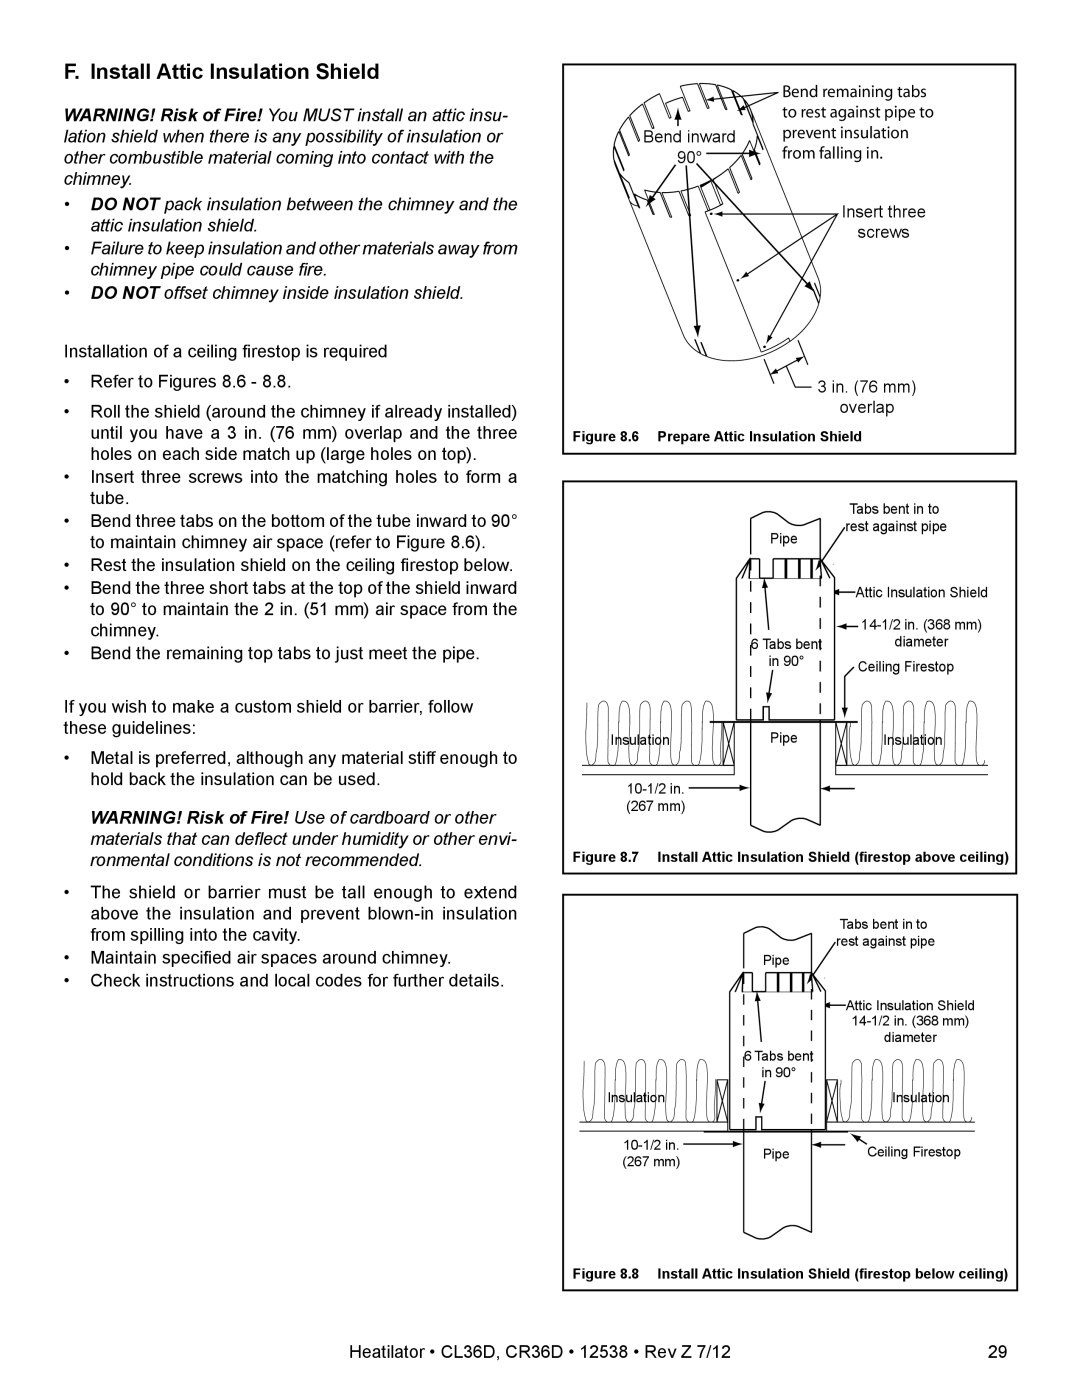 Heatiator CL36D owner manual F. Install Attic Insulation Shield 